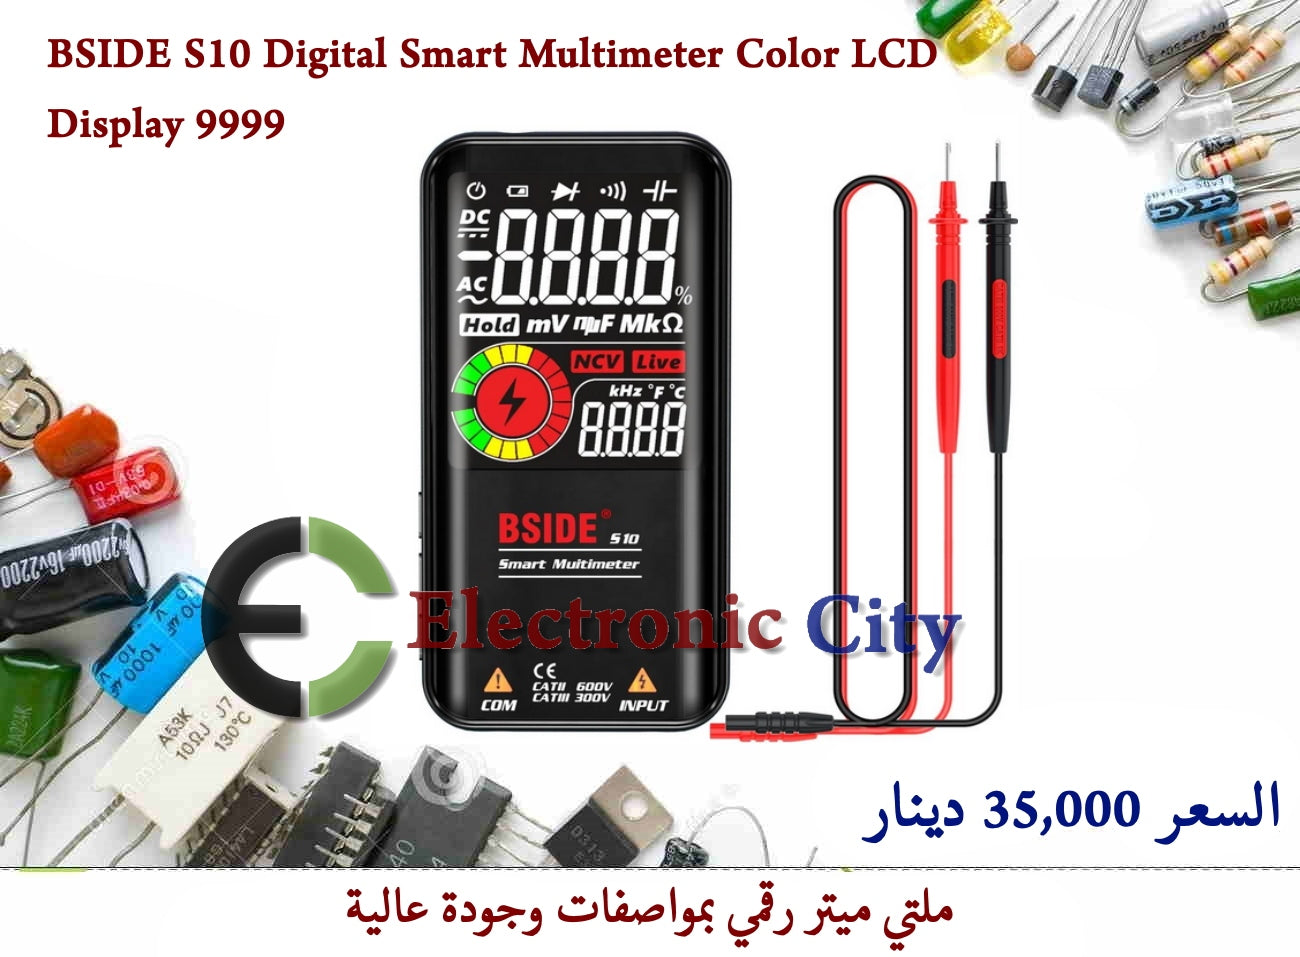 BSIDE S10 Digital Smart Multimeter Color LCD Display 9999